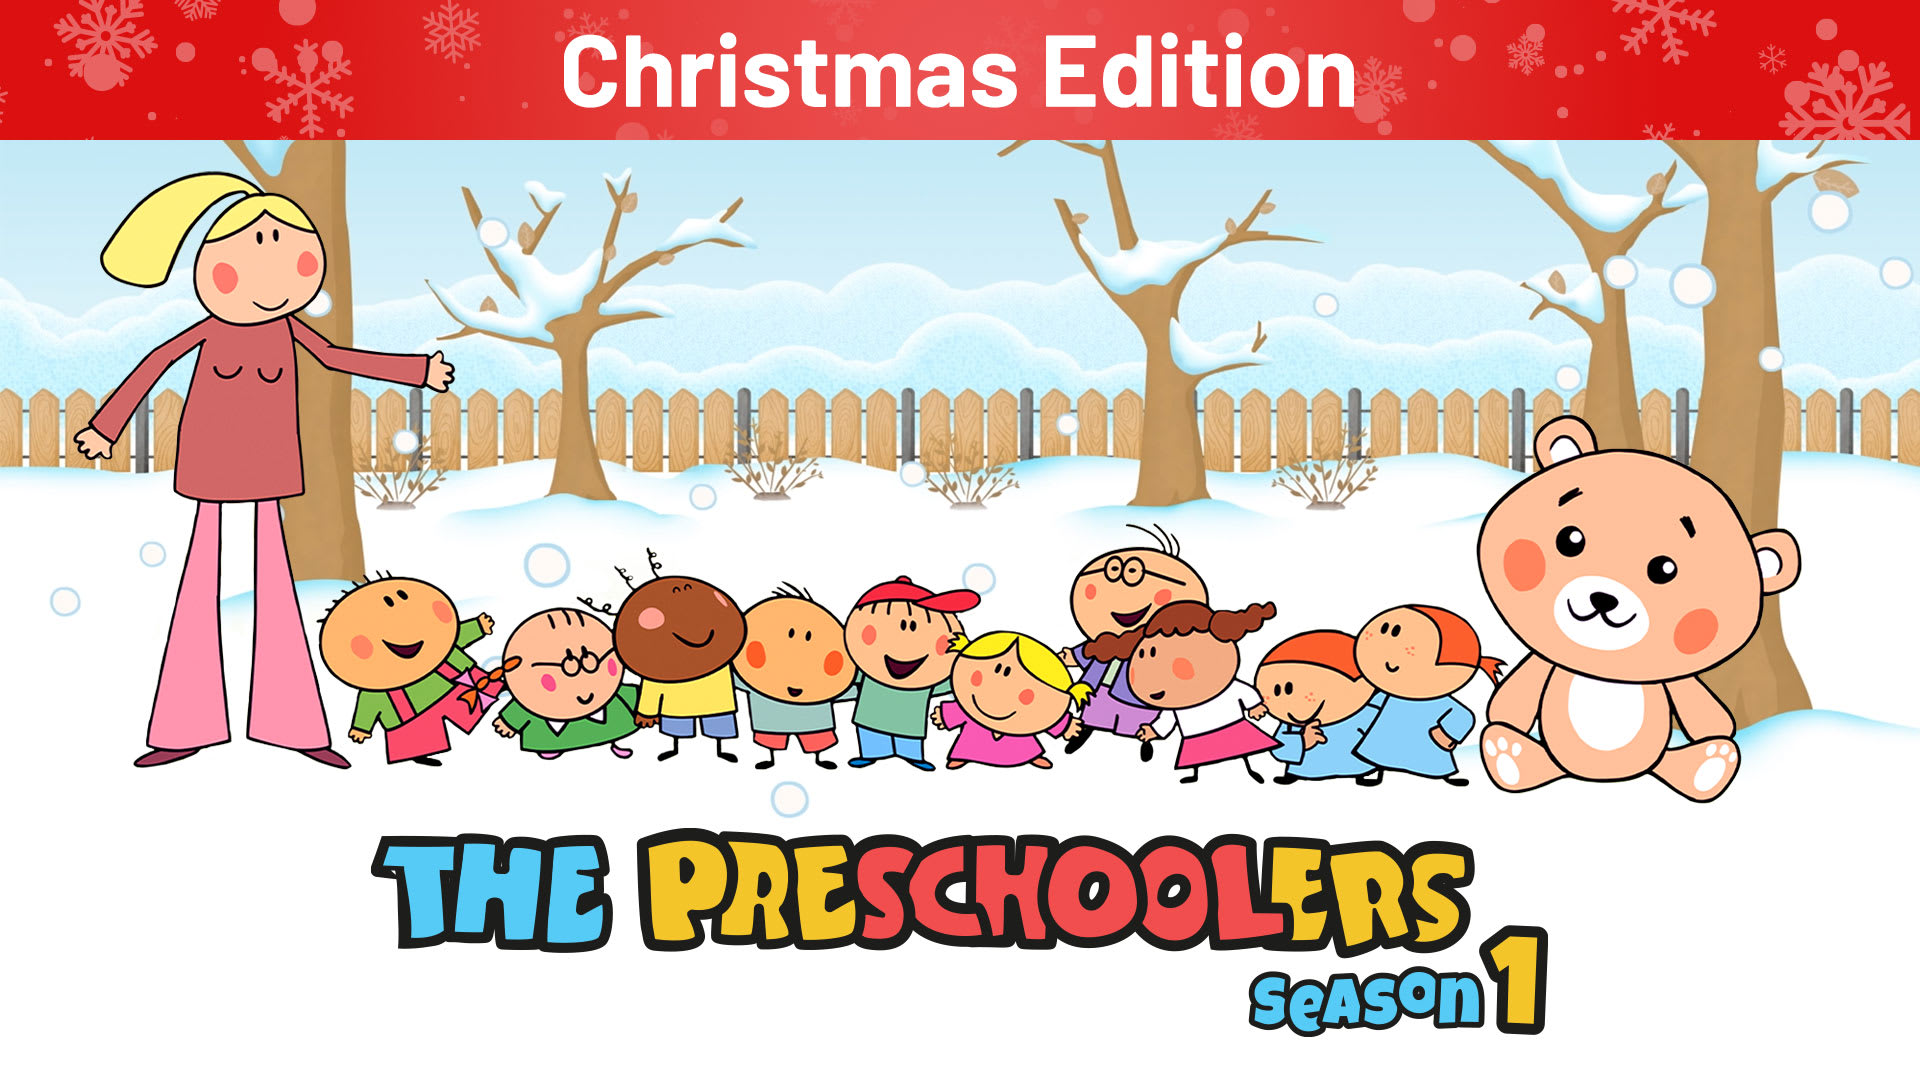 The Preschoolers: Season 1 Christmas Edition